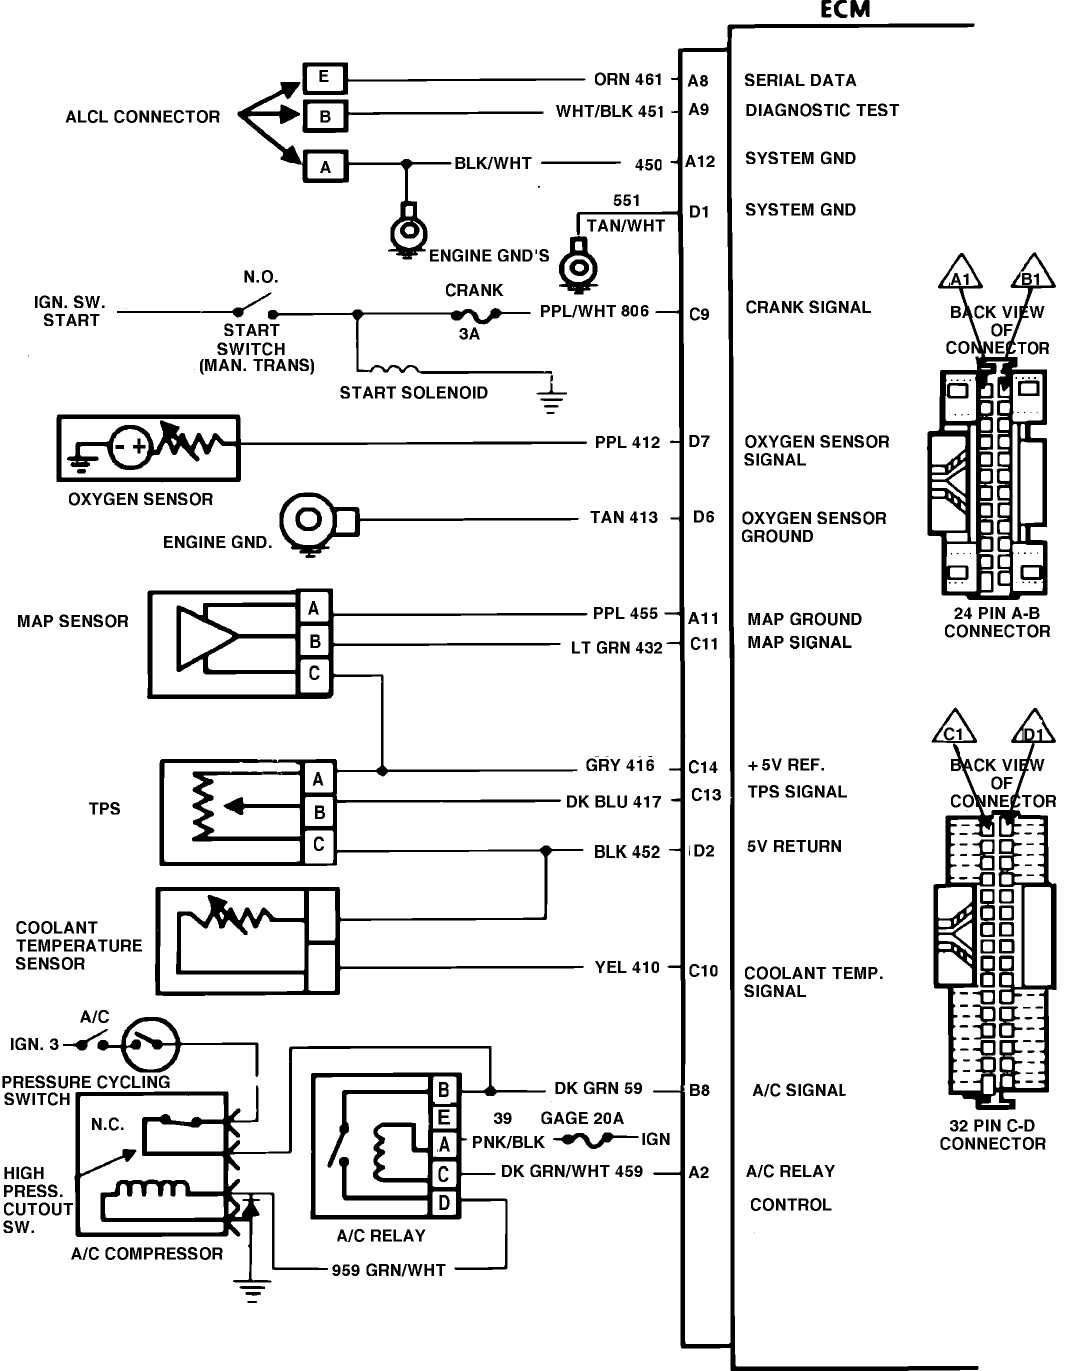 2010 07 22 1 engine wiring harness diagram wiring diagrams rh sbrowne me engine wiring